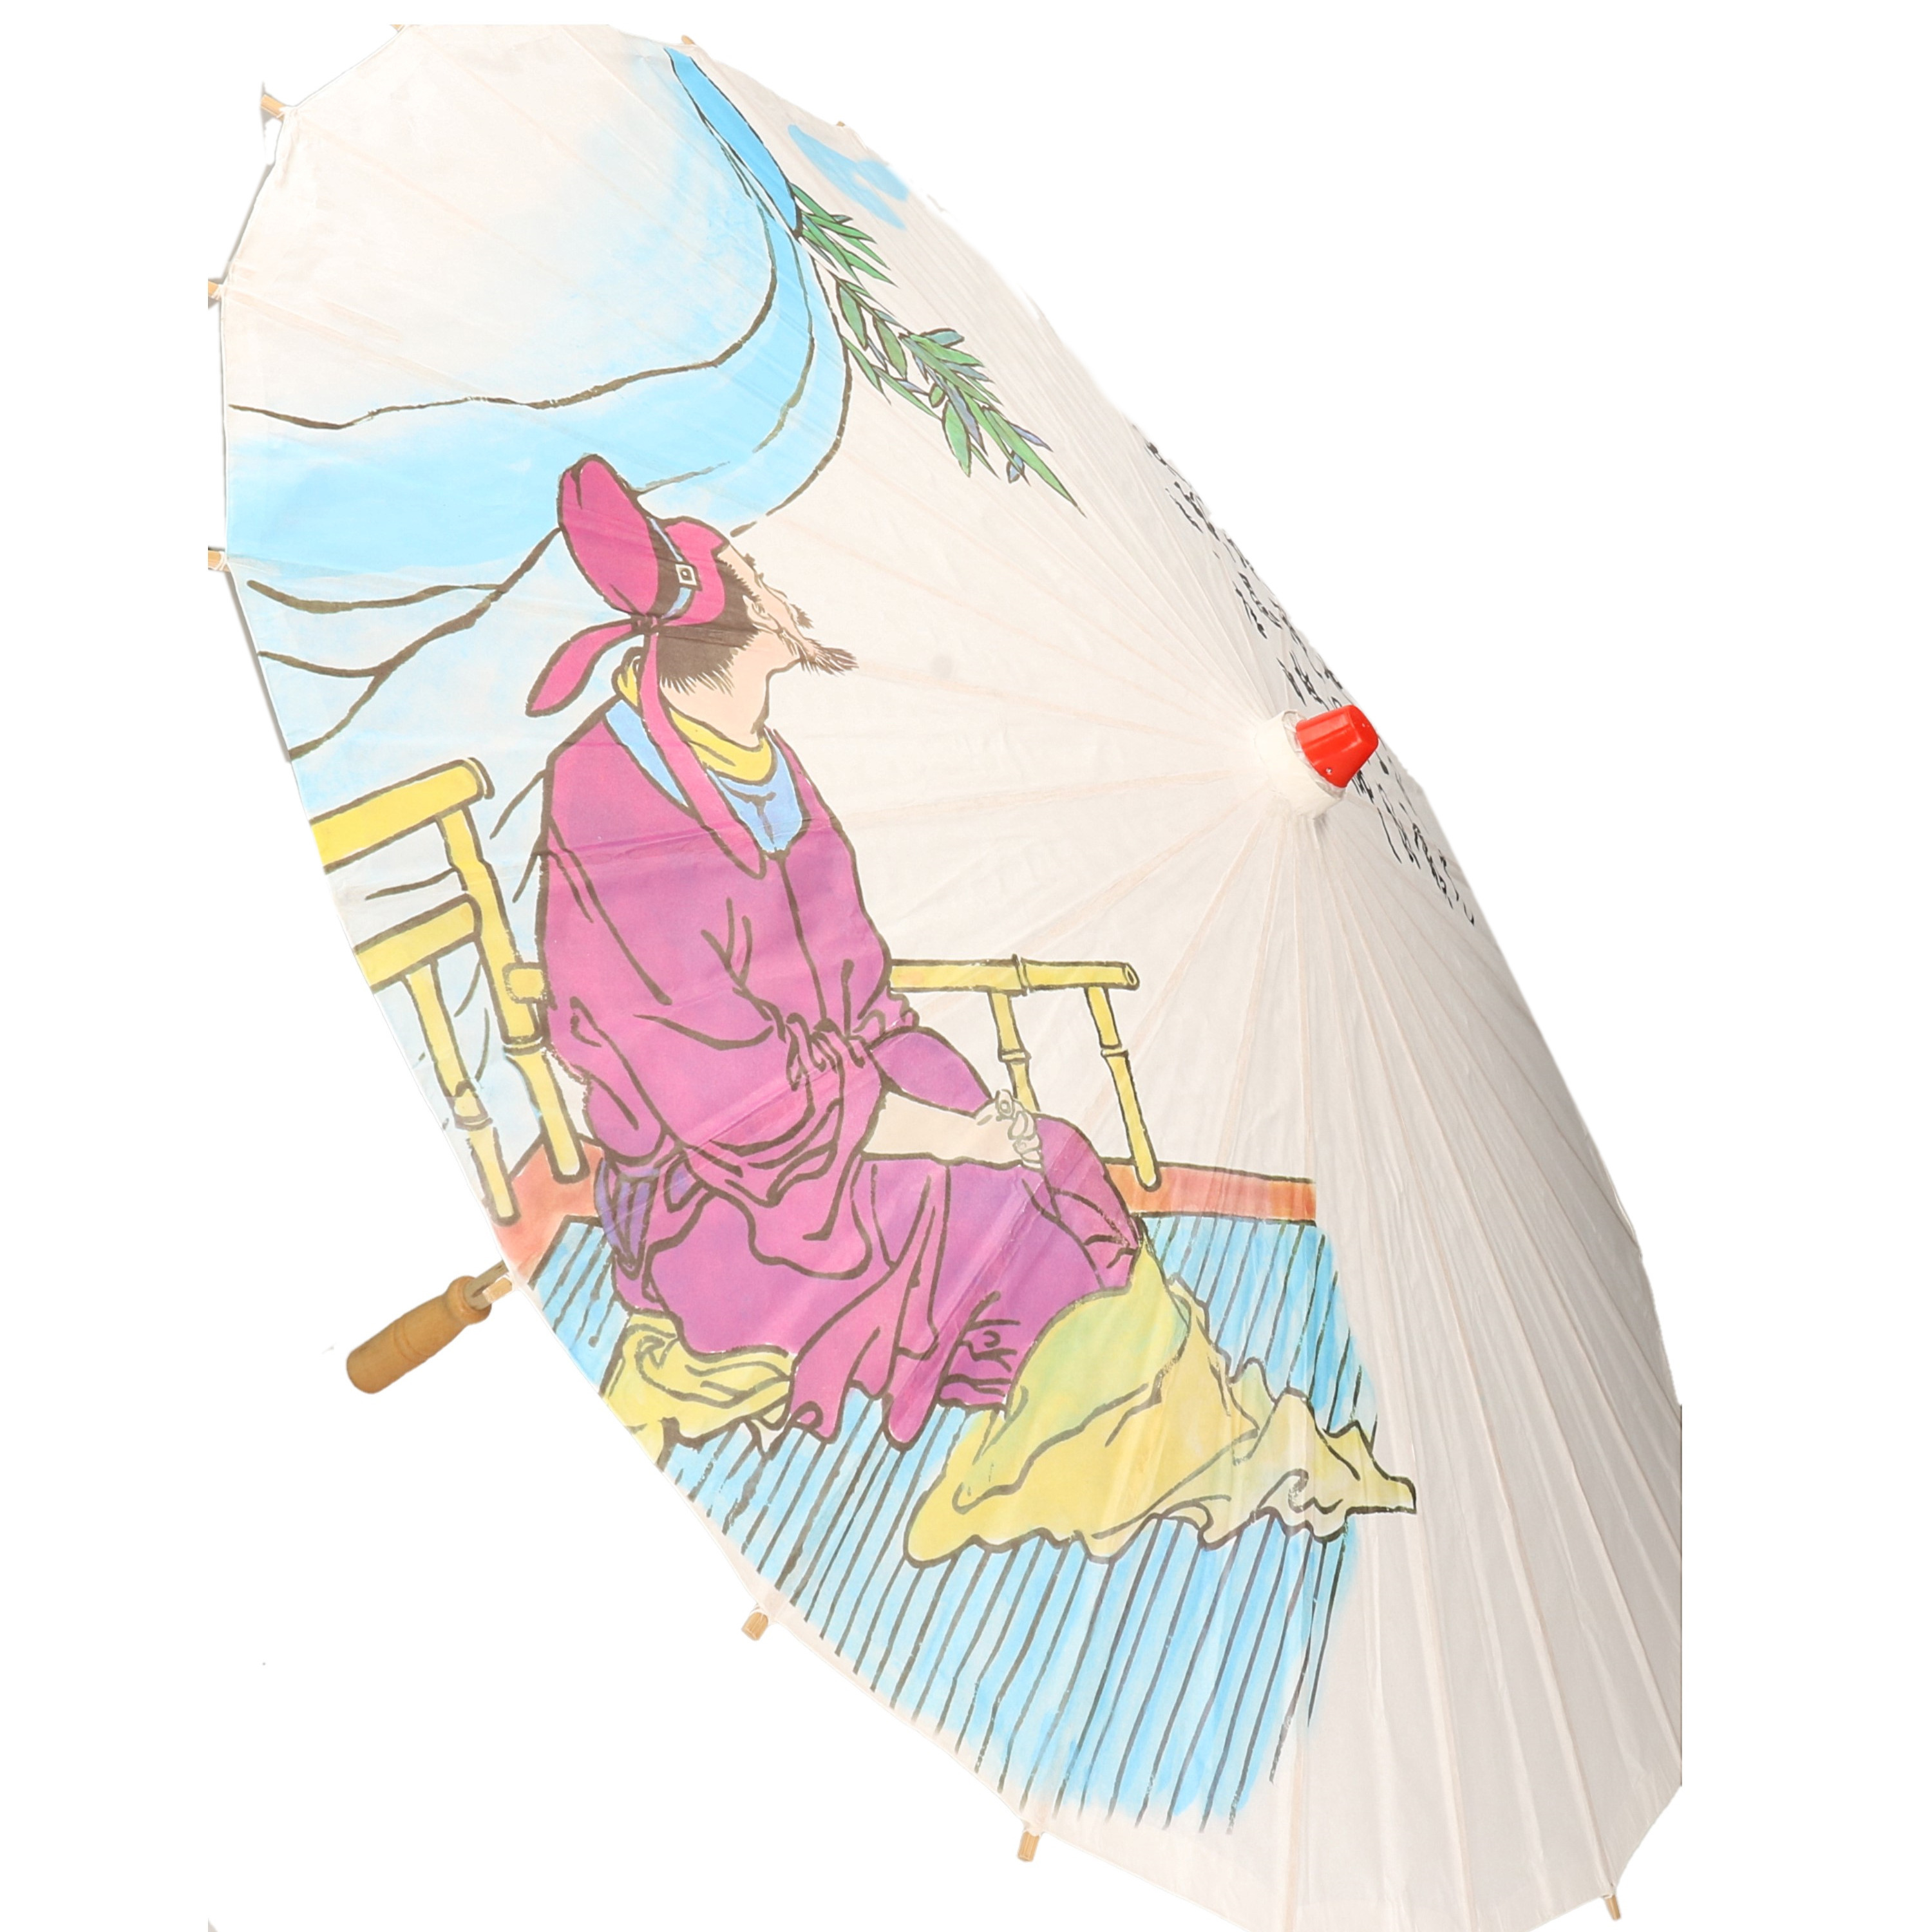 Houten Japanse decoratie paraplu 85 cm diameter